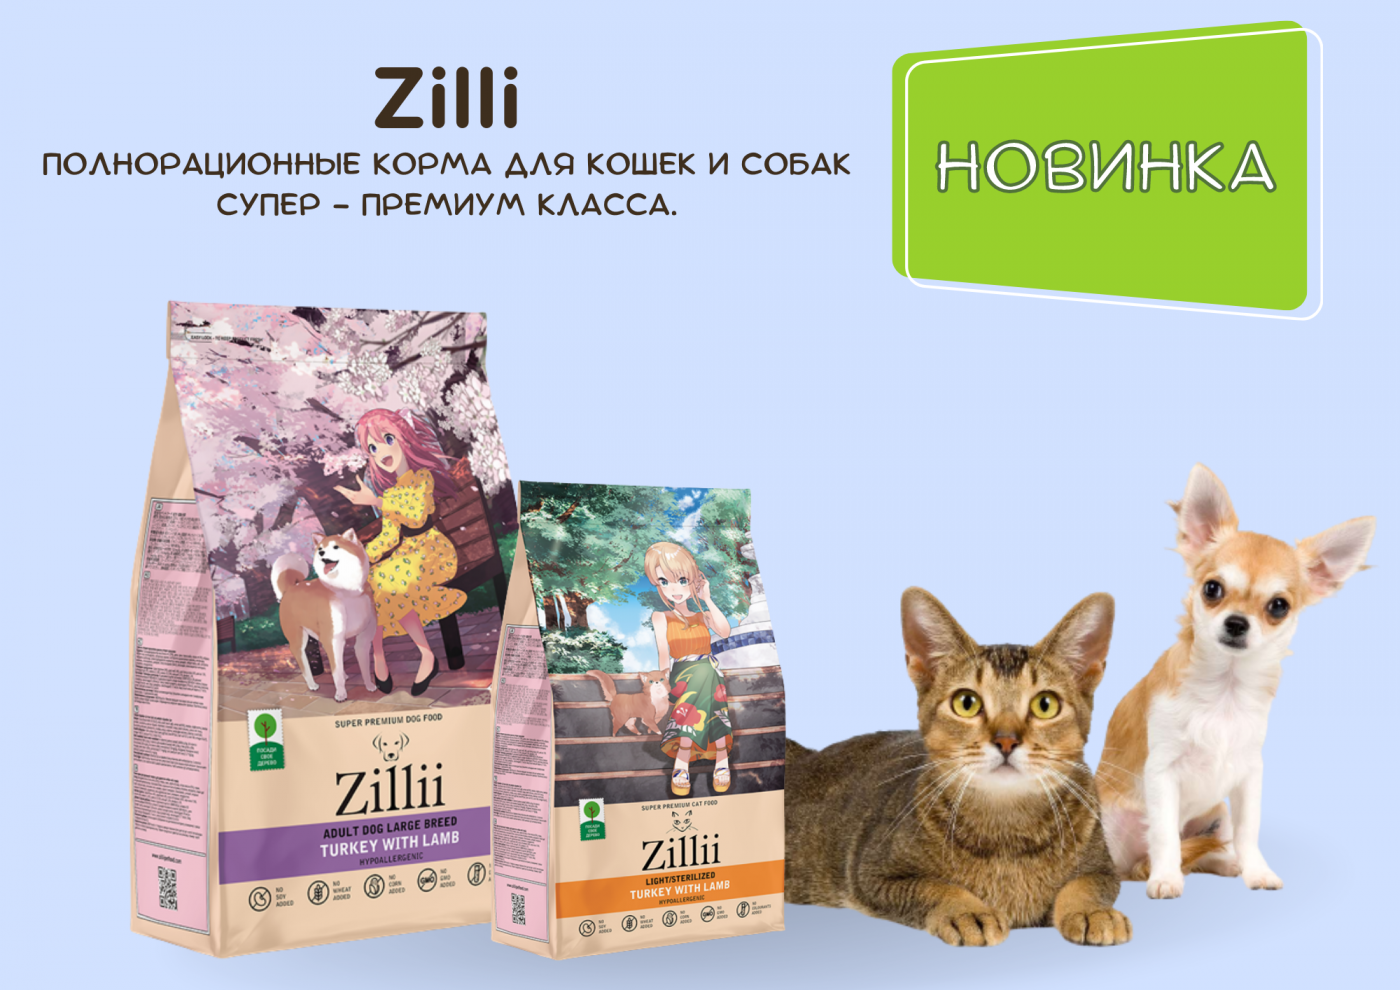 Айо для кошек отзывы. Zillii корм для кошек. Корм кошачий сухой zillii. Корм для кошек Zilli кошек. Зилли корм для собак.